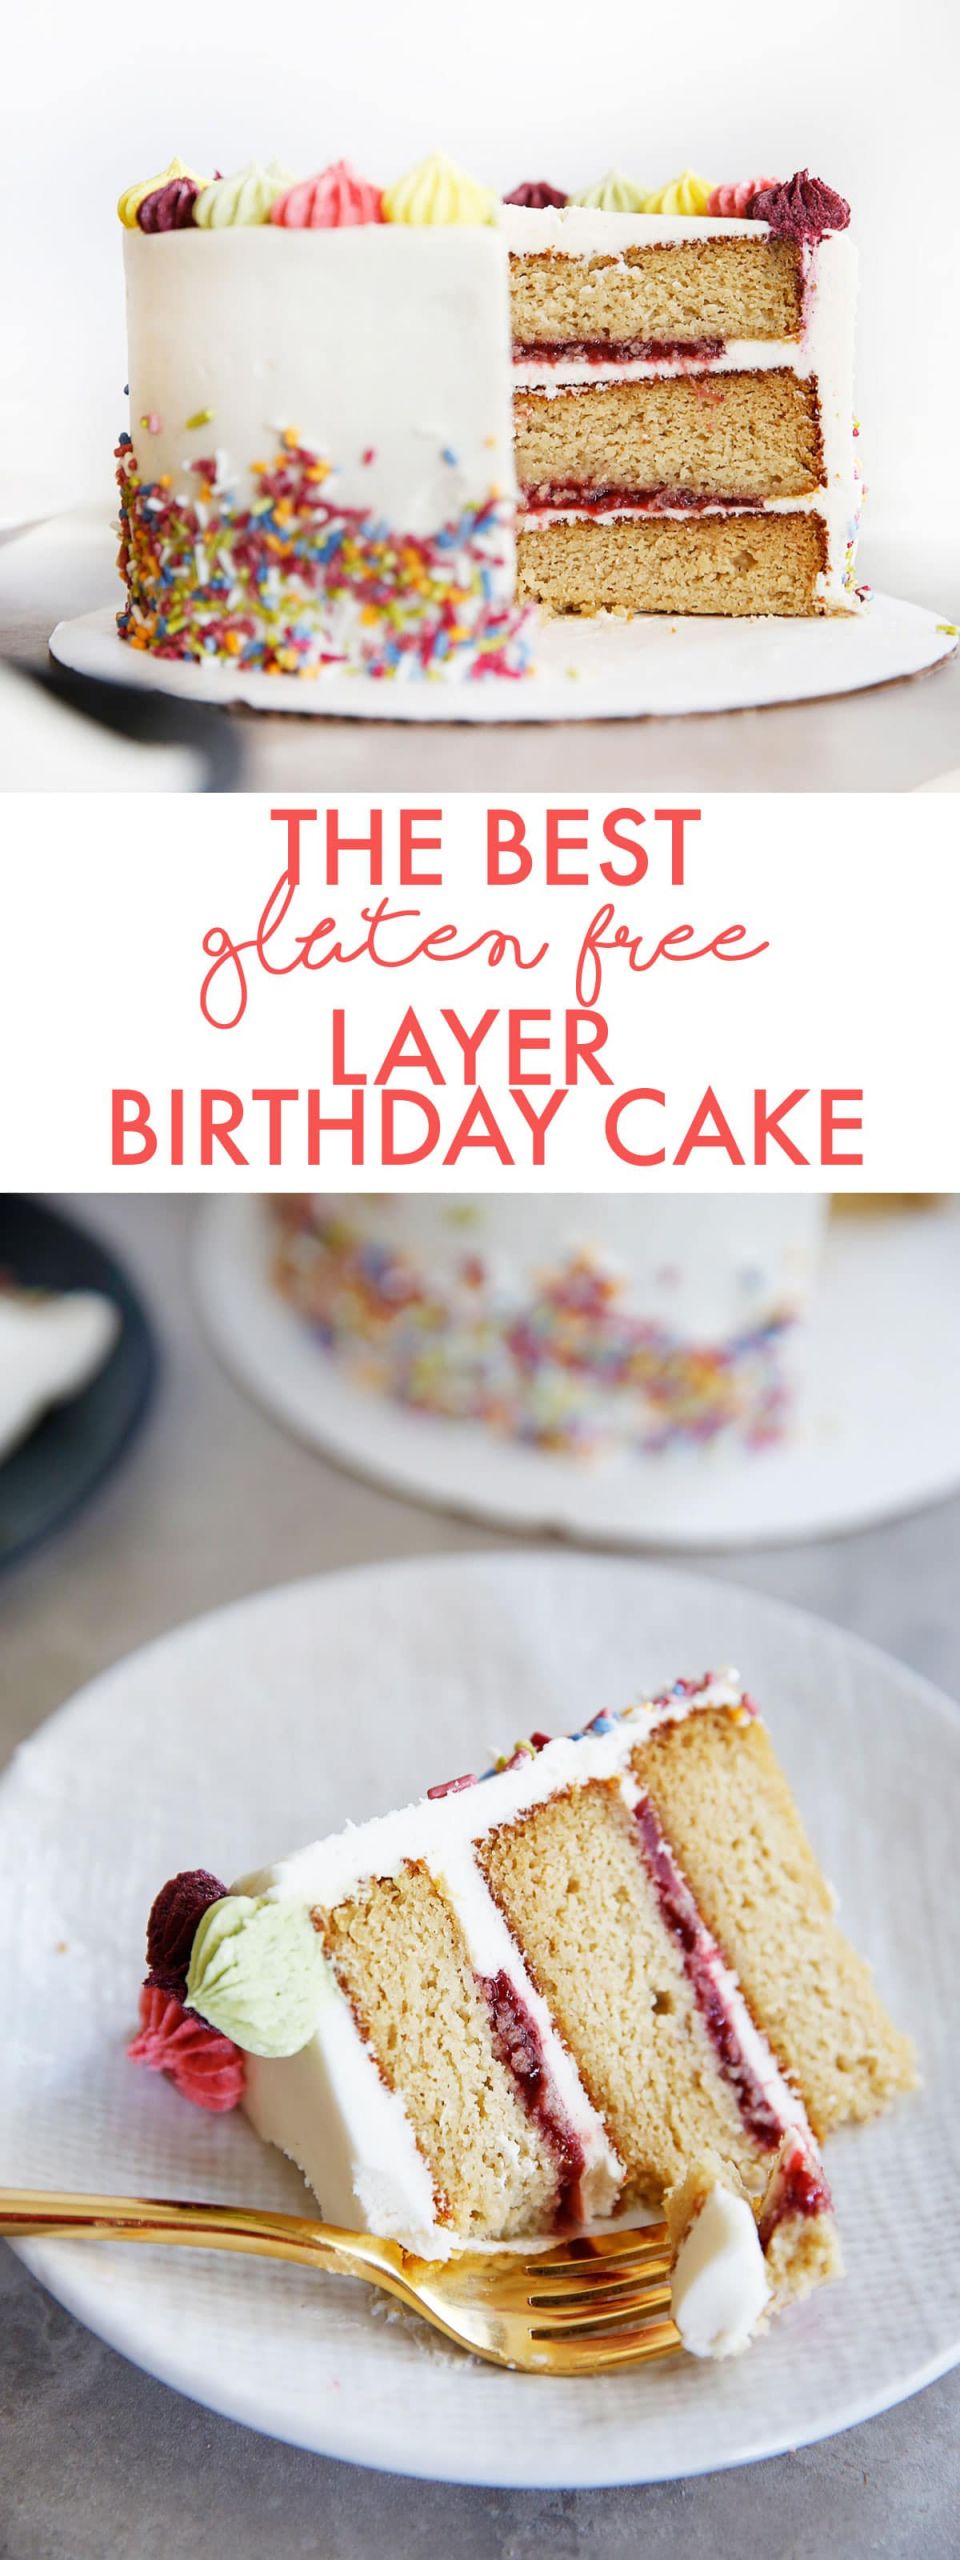 Gluten Free Birthday Cakes
 The BEST Gluten Free Layer Birthday Cake Lexi s Clean